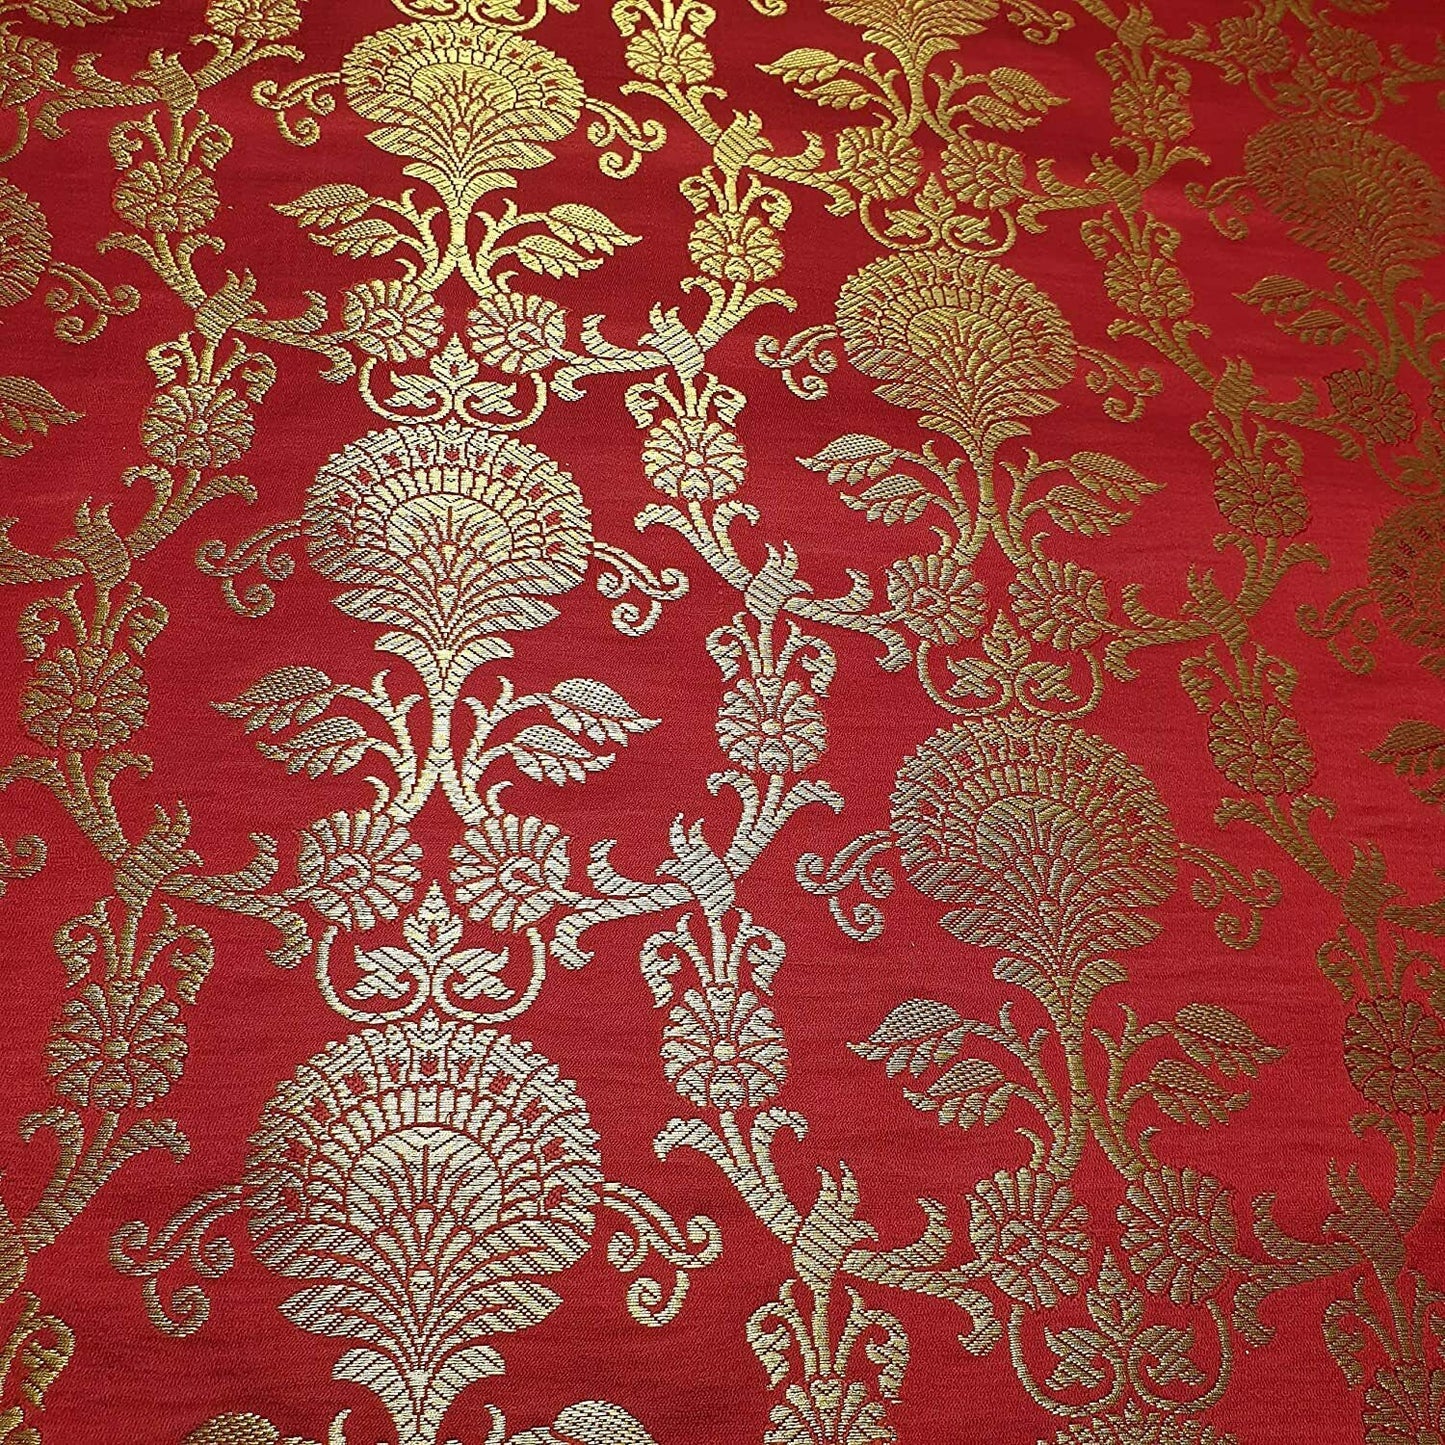 New Prints Ornamental Floral Gold Metallic Print Indian Banarasi Brocade Fabric (Red)